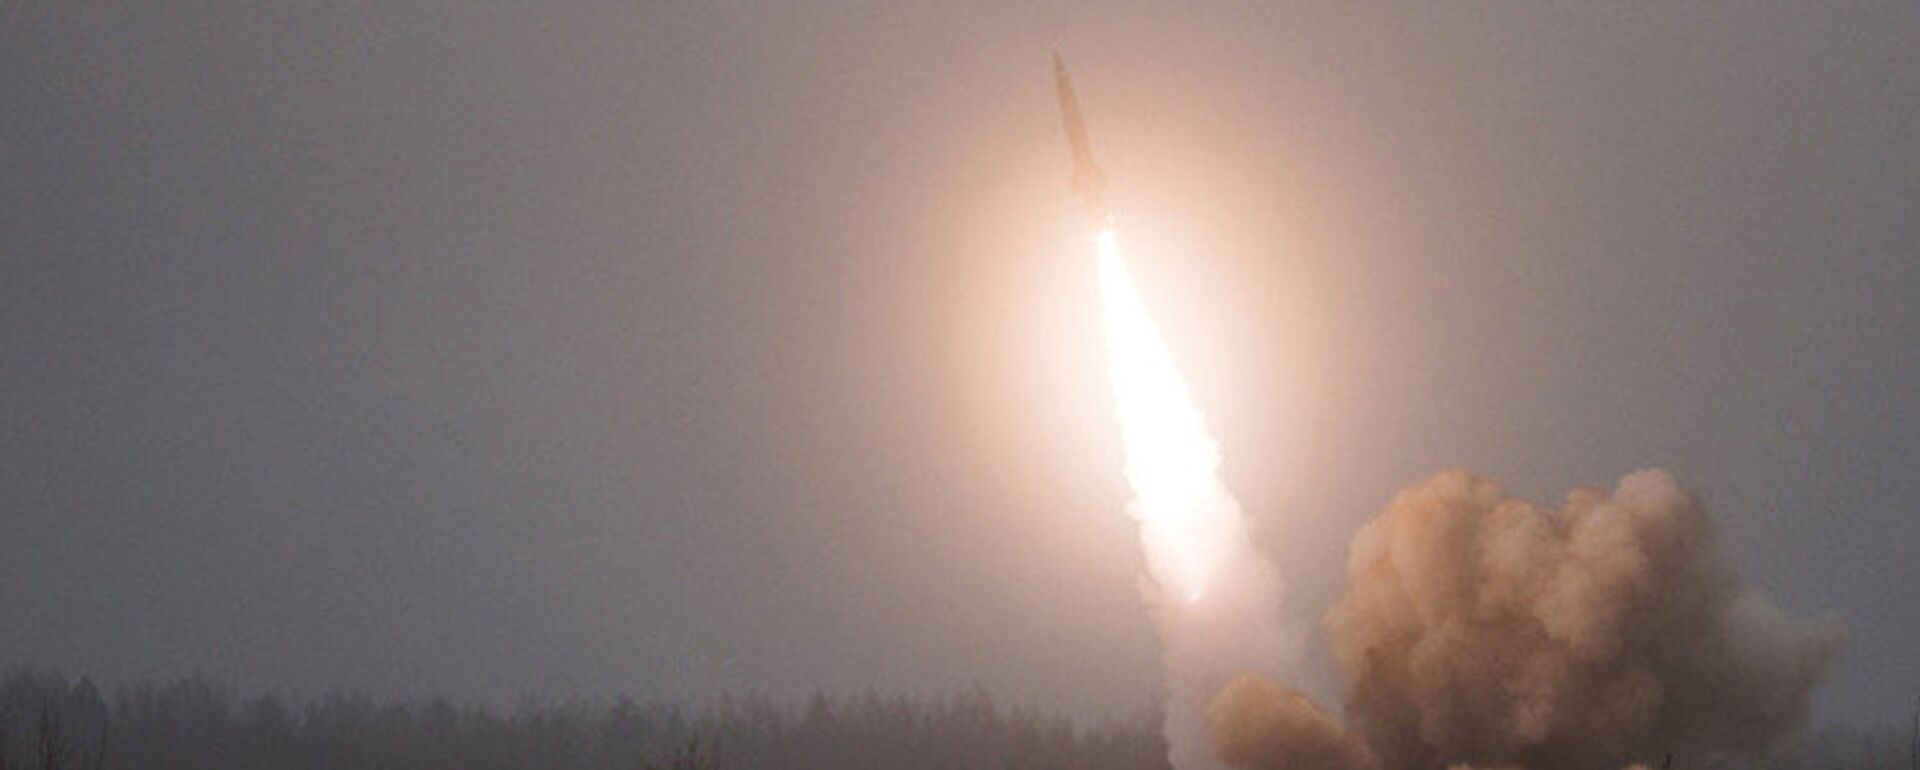 روسيا تختبر صاروخ تسيركون  - سبوتنيك عربي, 1920, 28.05.2022